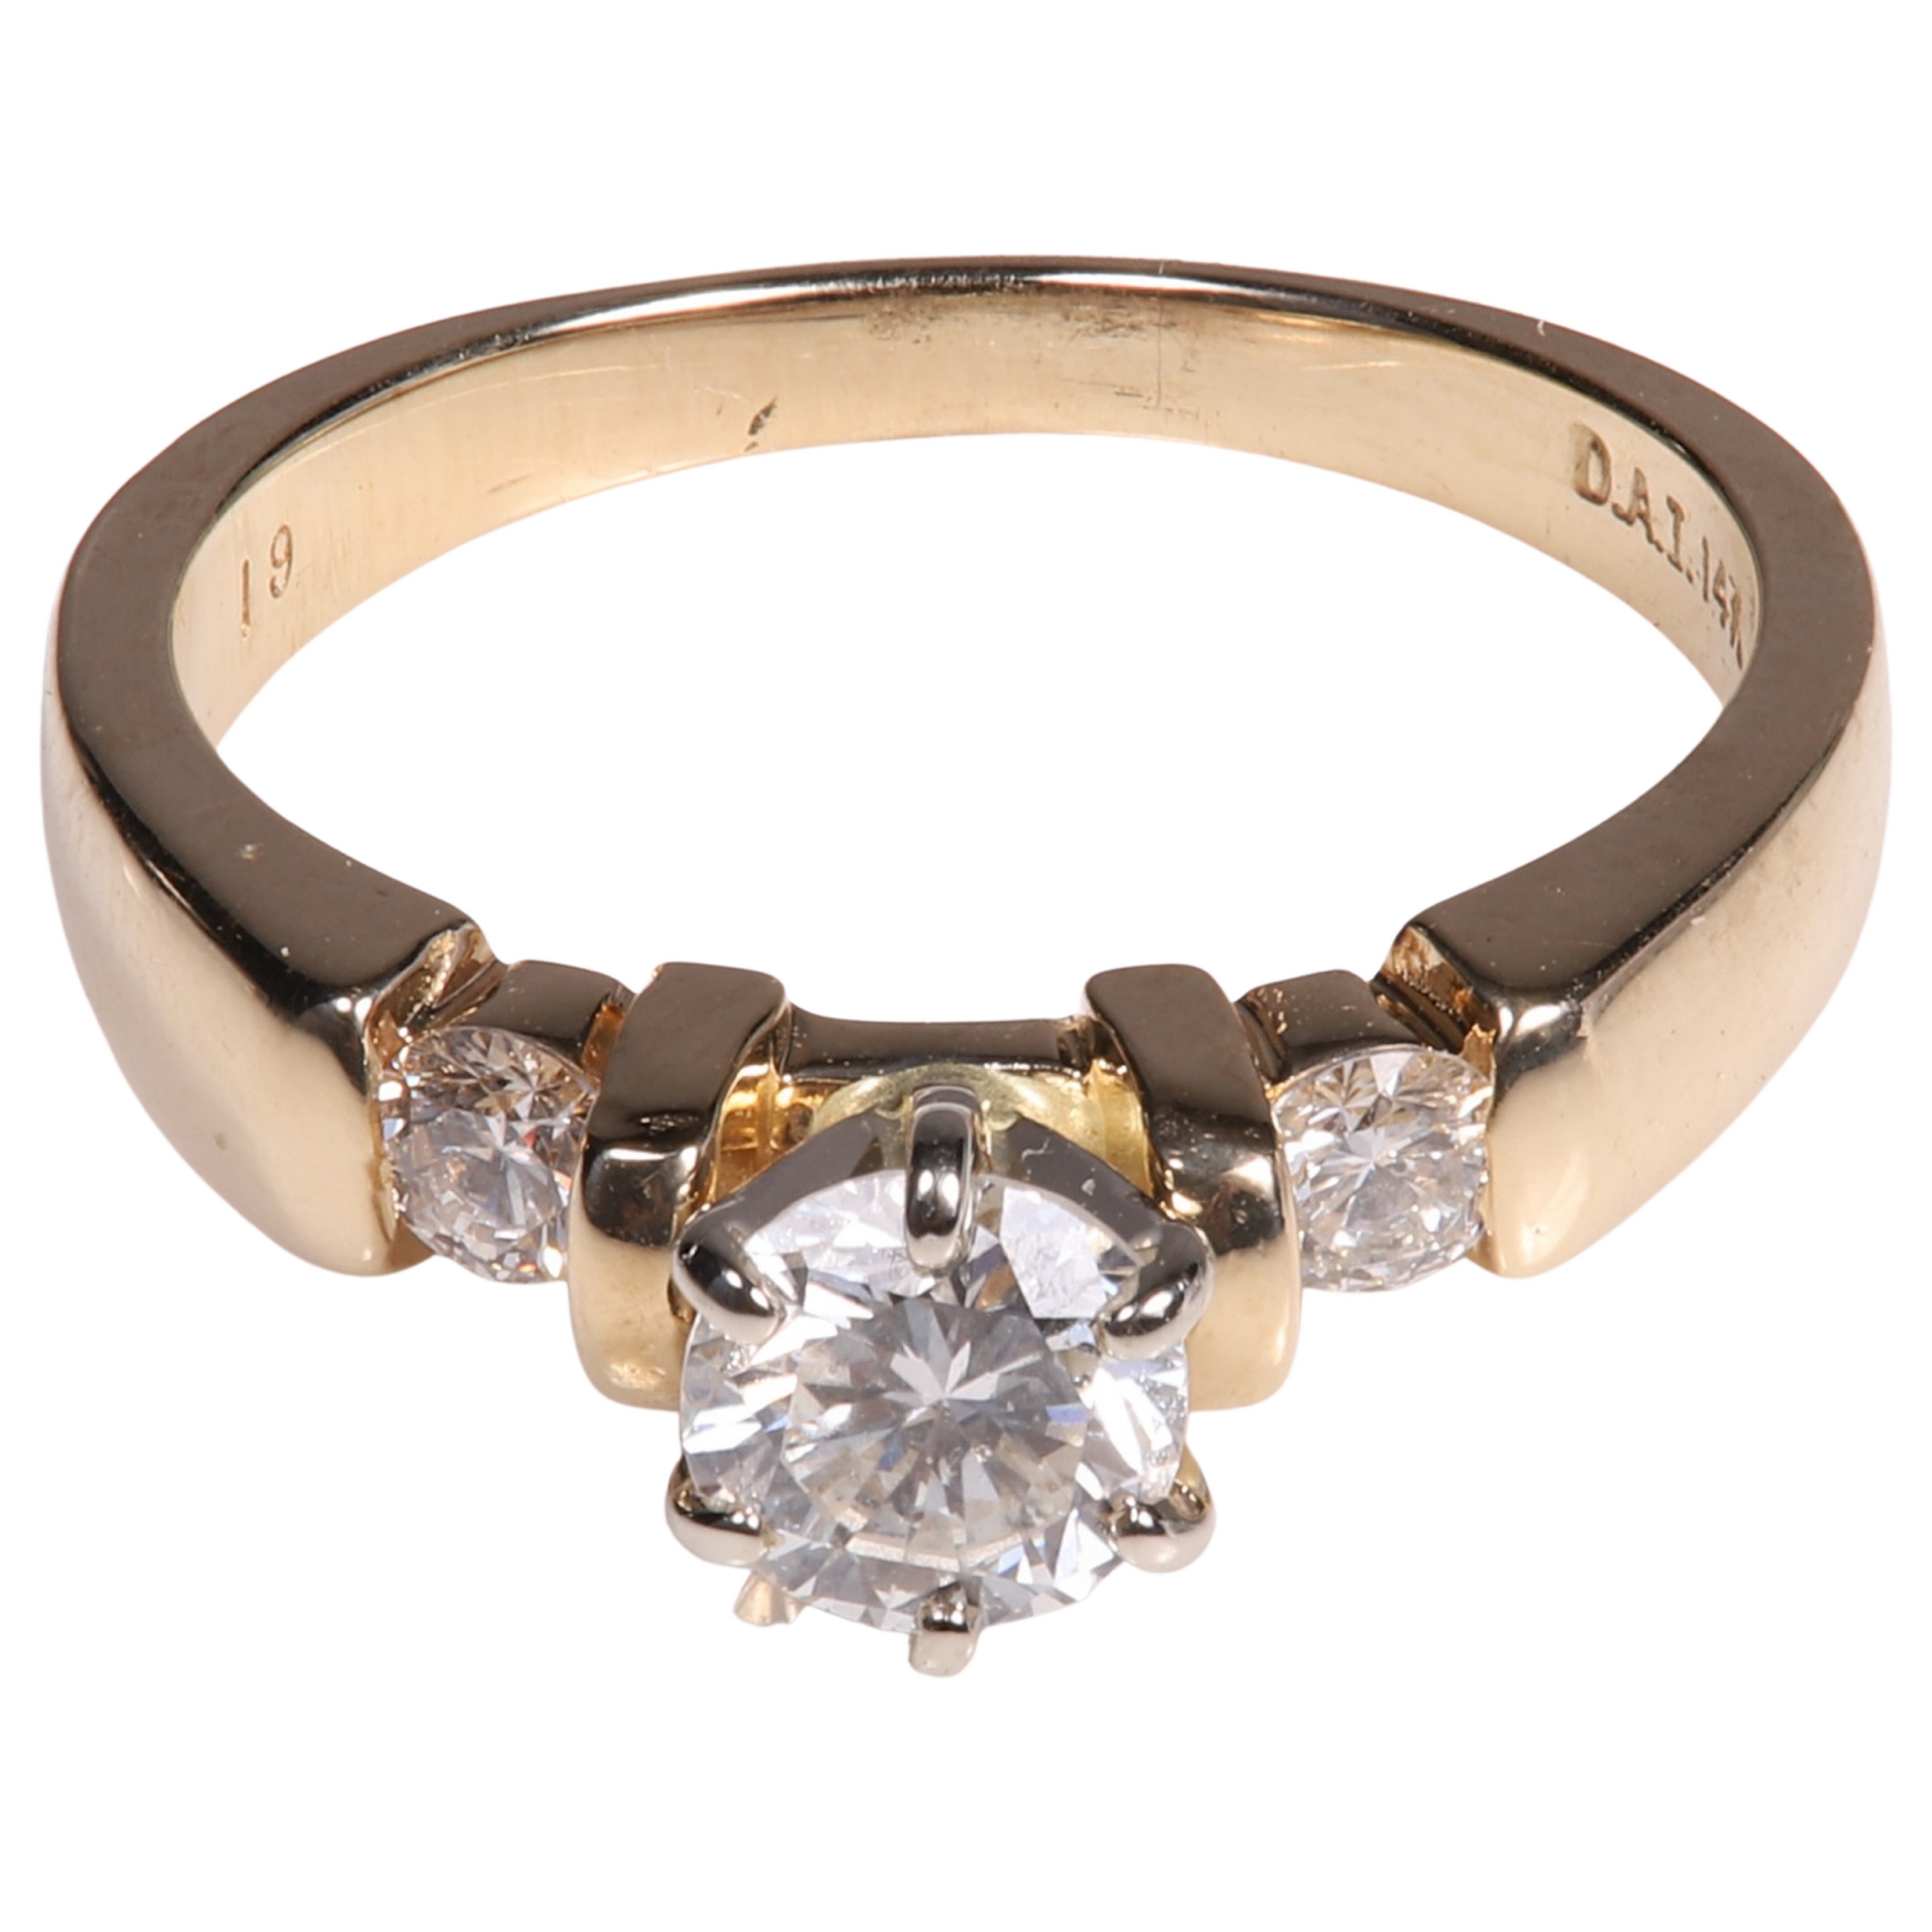 Diamond engagement ring c/o 5.14